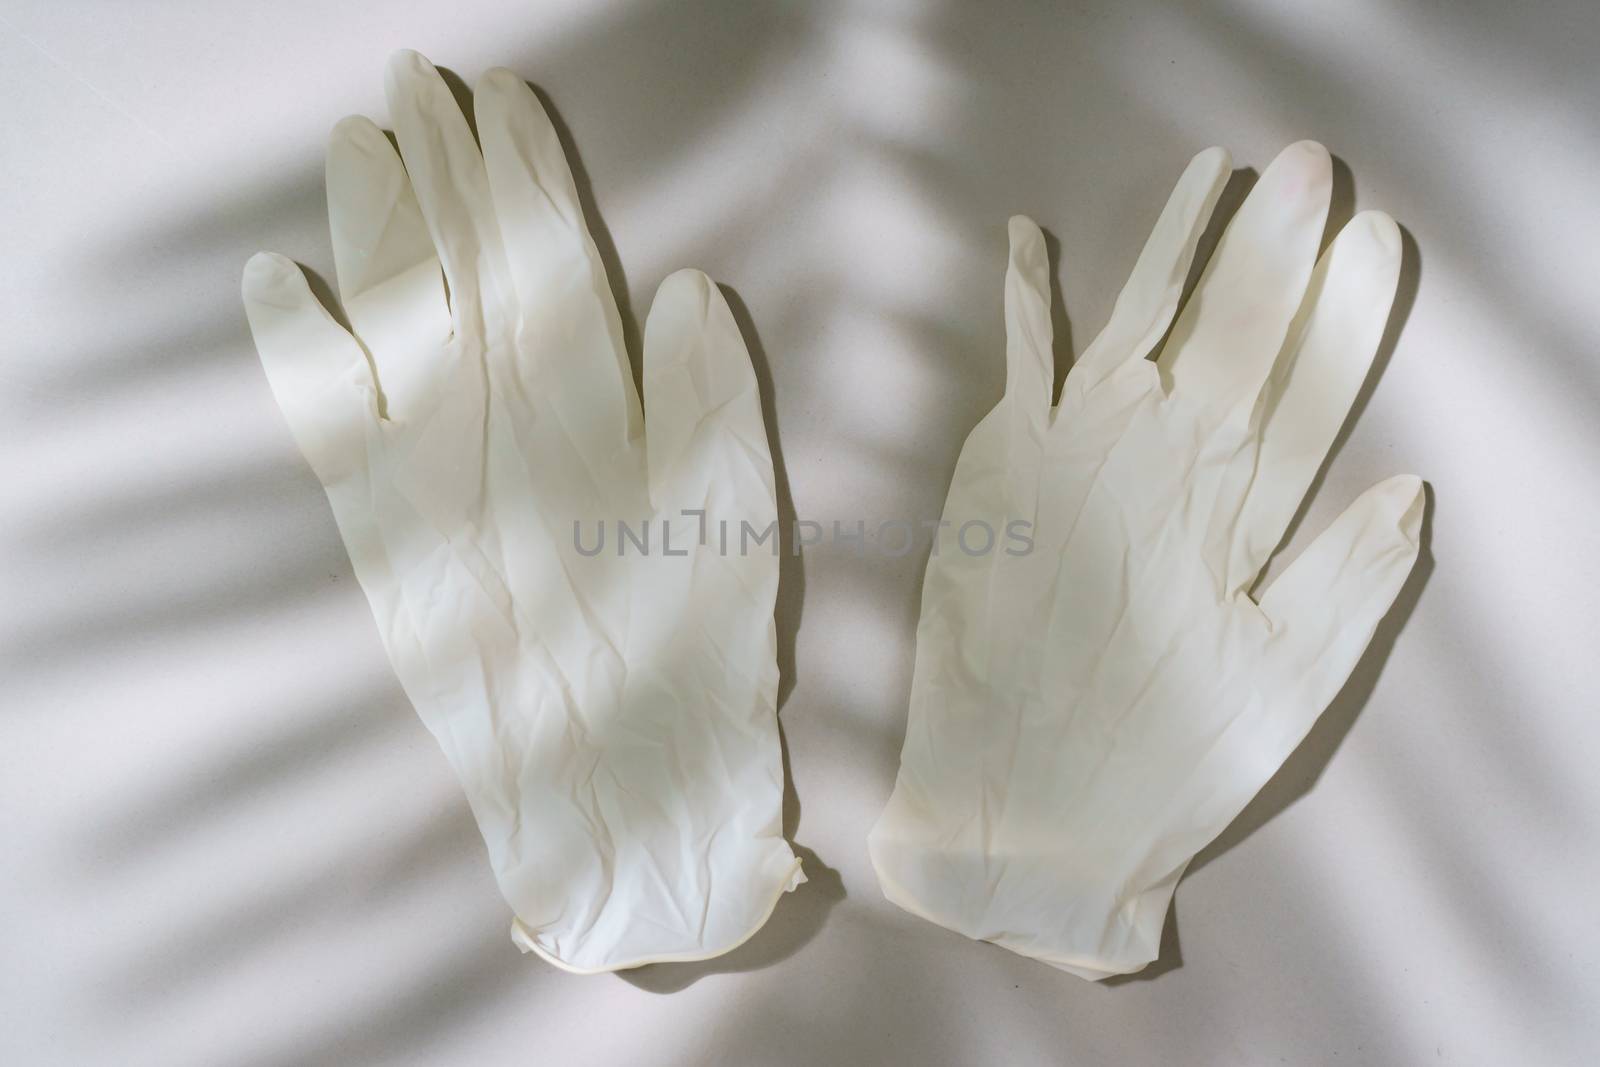 Pair of white latex medical gloves